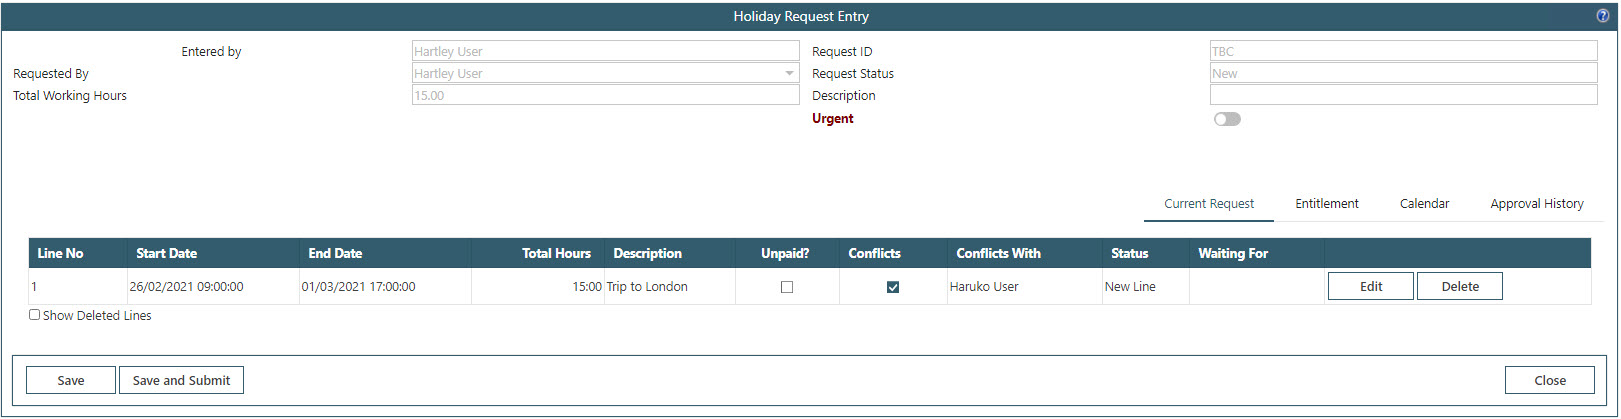 Sicon WAP Holidays Help and User Guide - WAP Holidays HUG Section 11.1 - Image 4